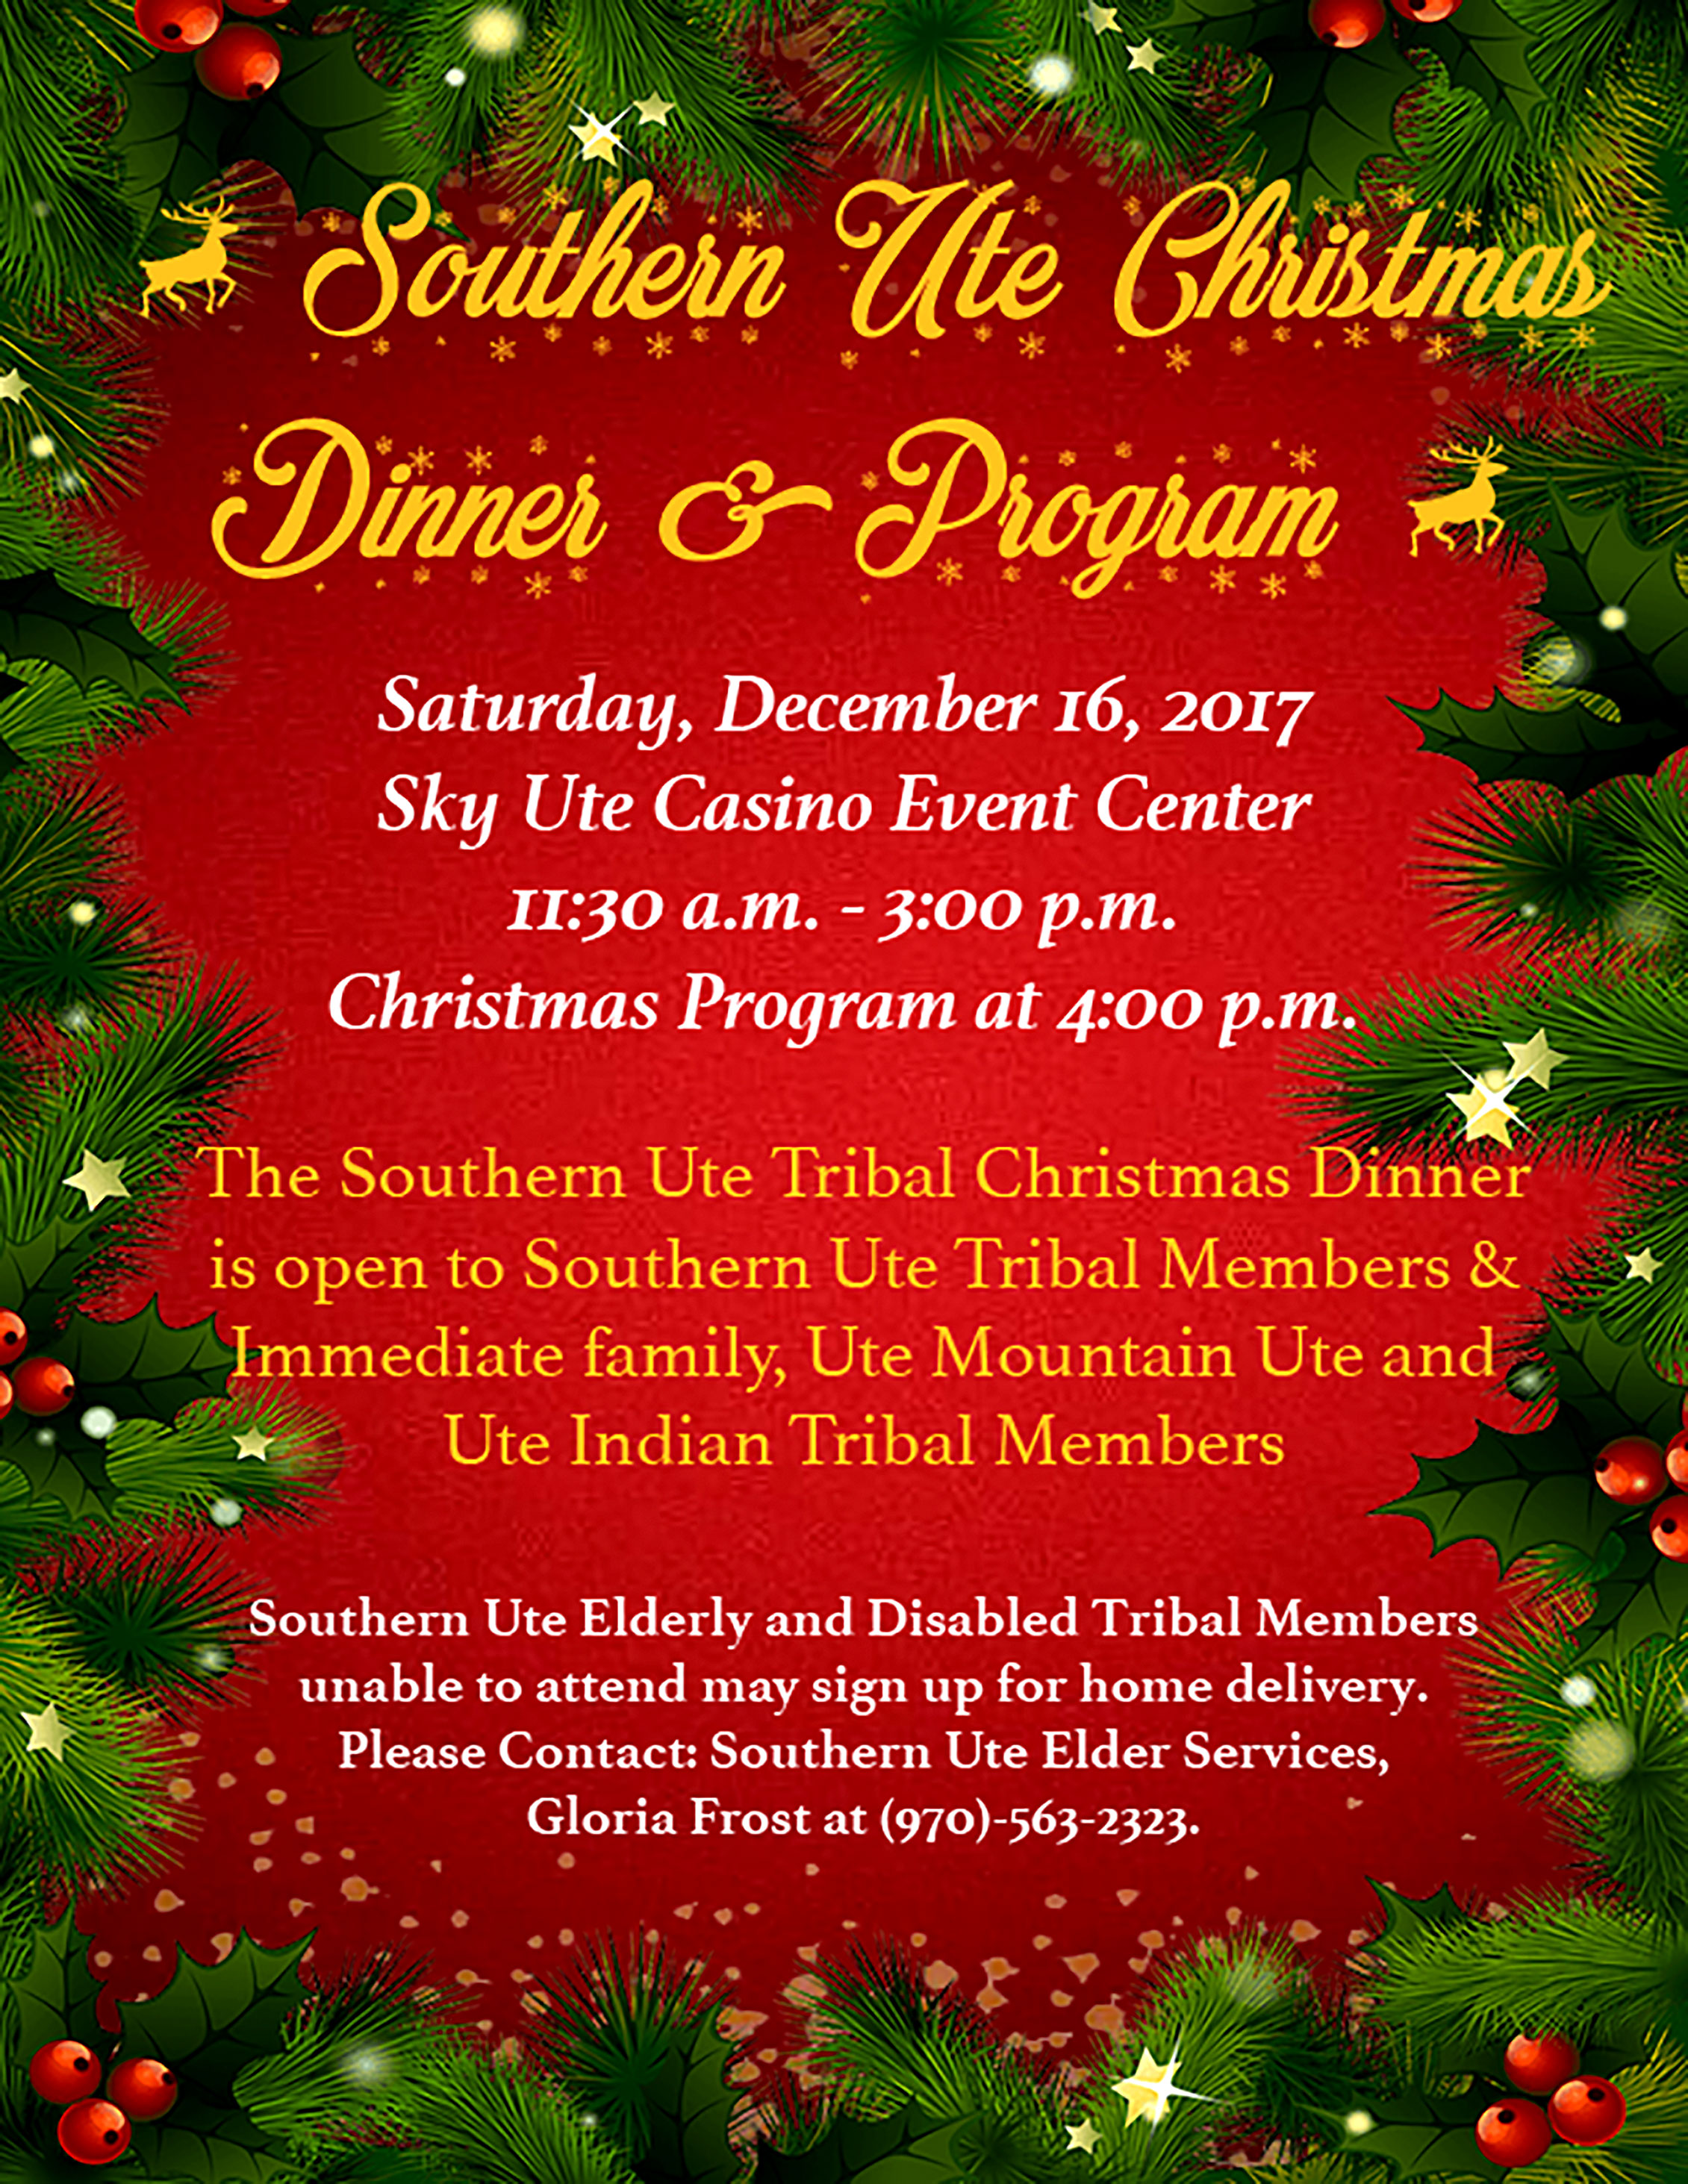 The Southern Ute Drum | Southern Ute Christmas Dinner & Program